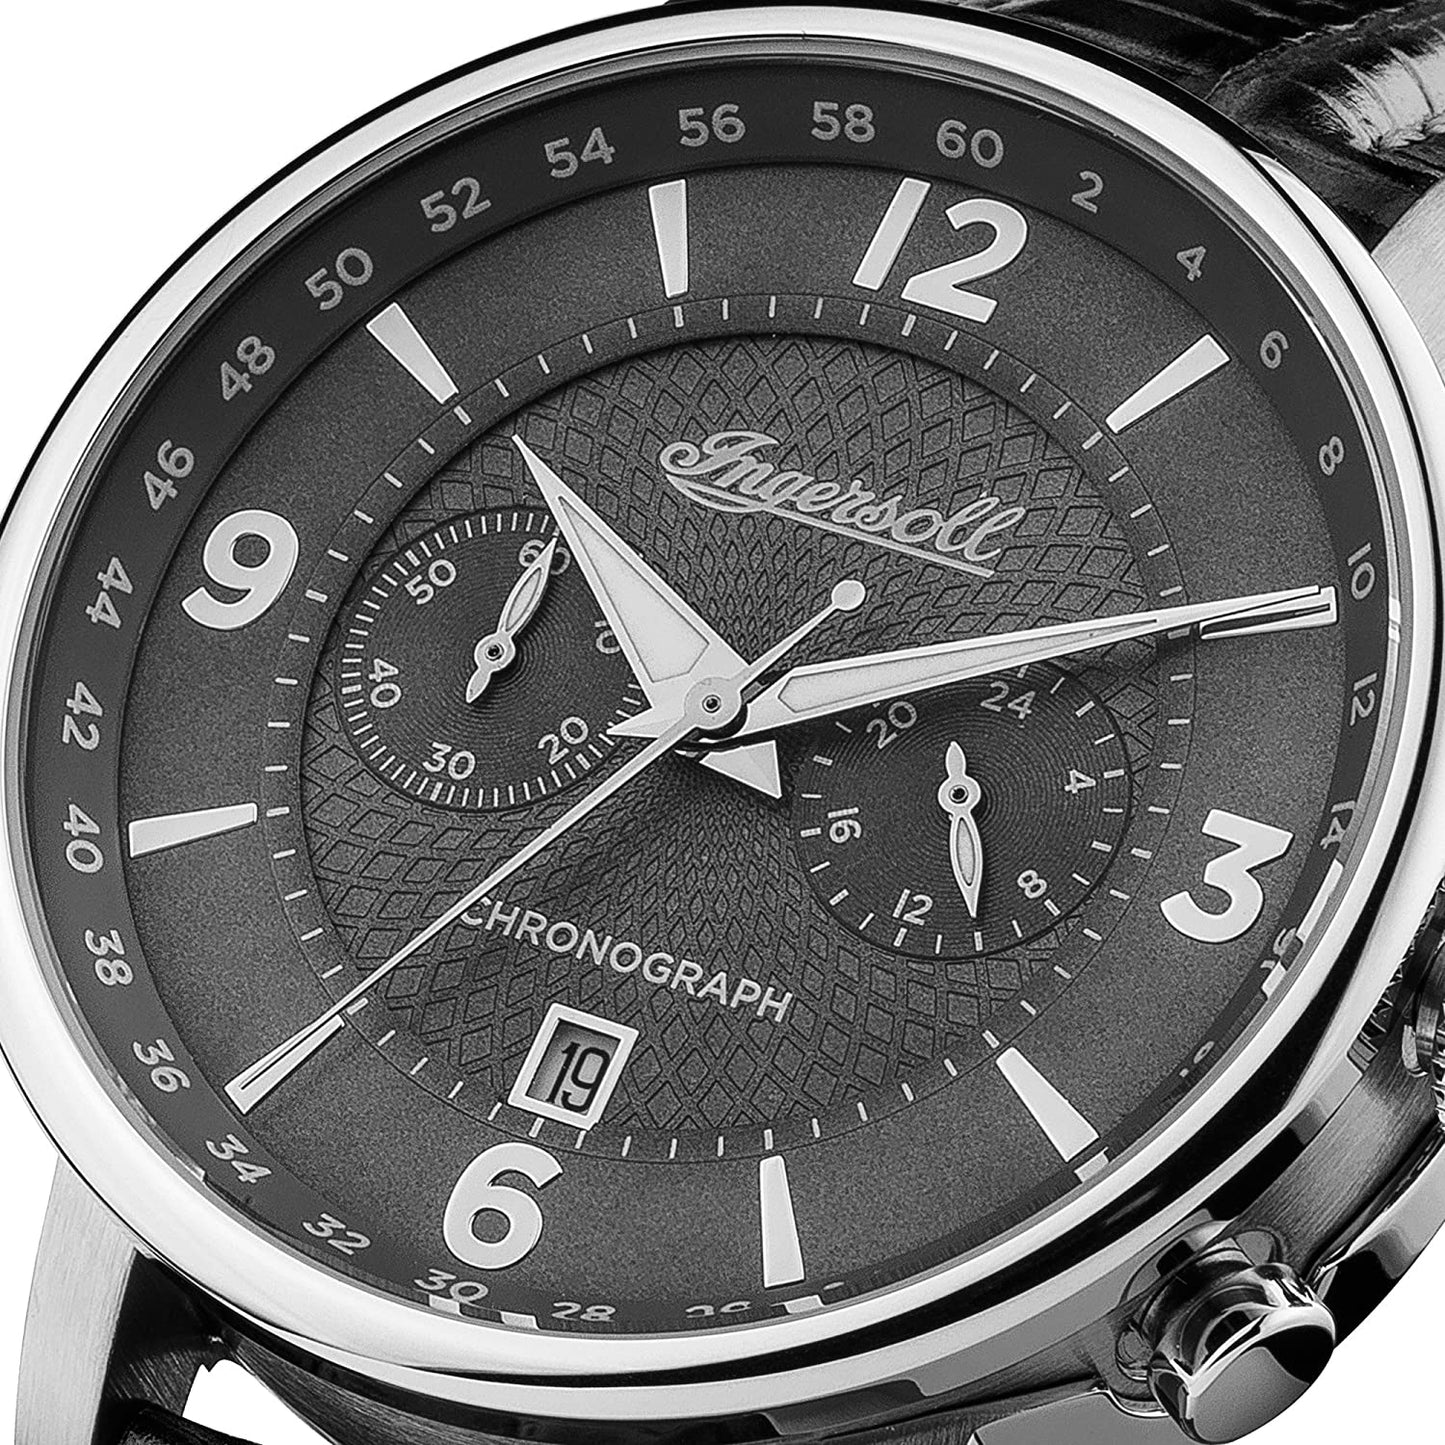 The Grafton Chronograph I00601 Watch